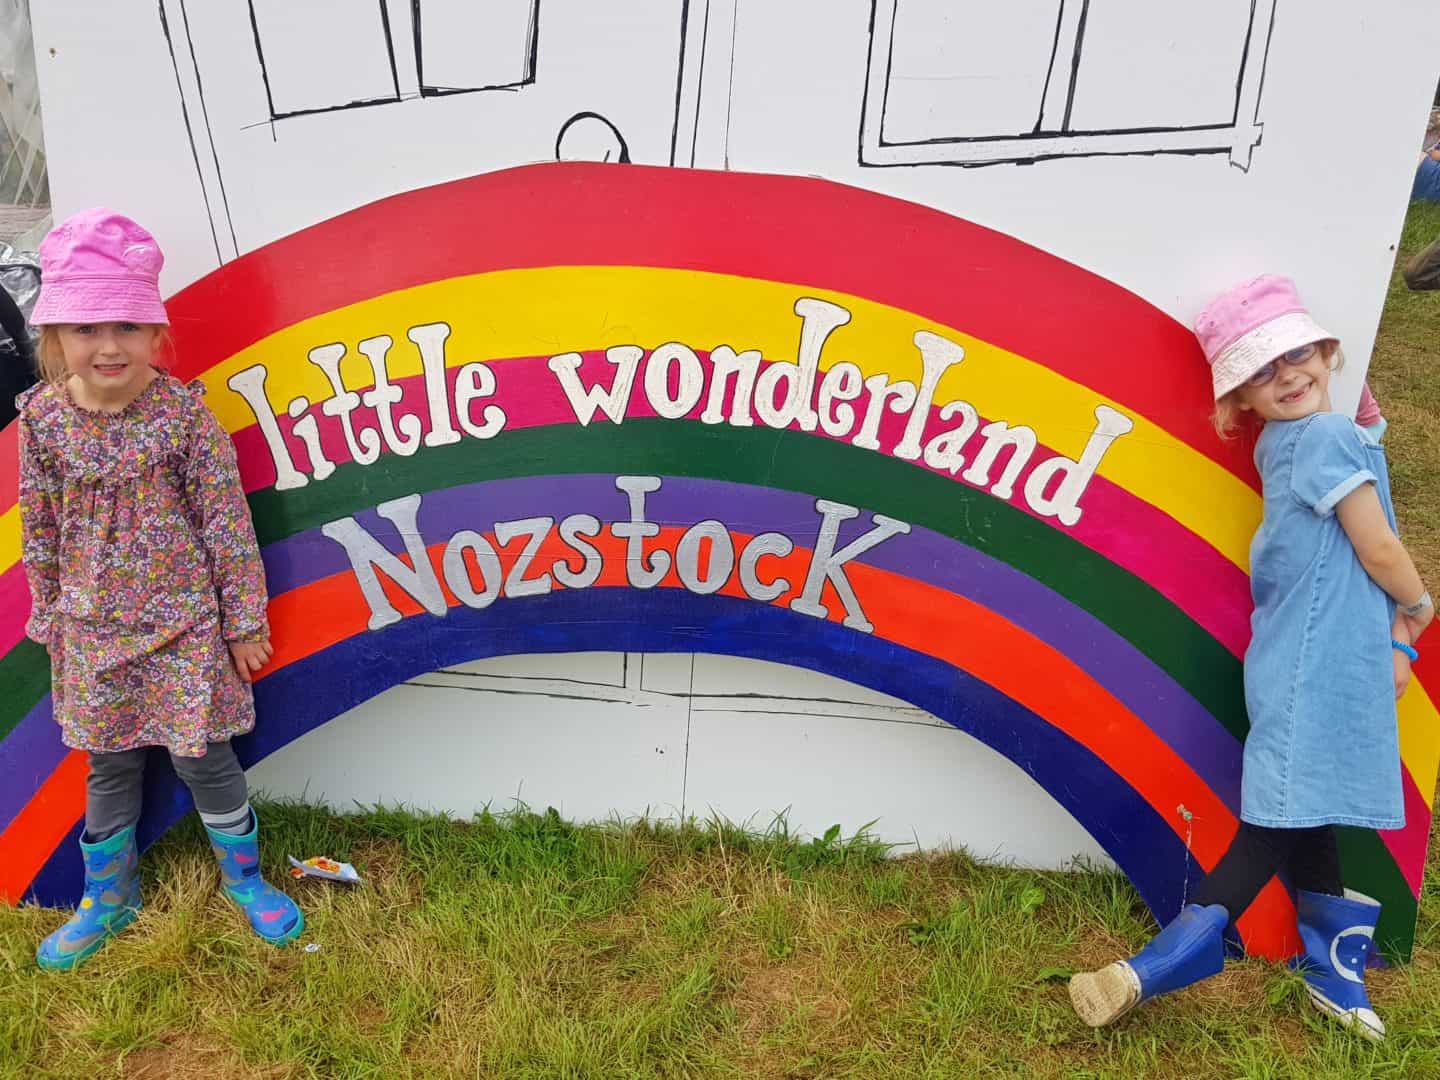 Little Wonderland kids area at Nozstock